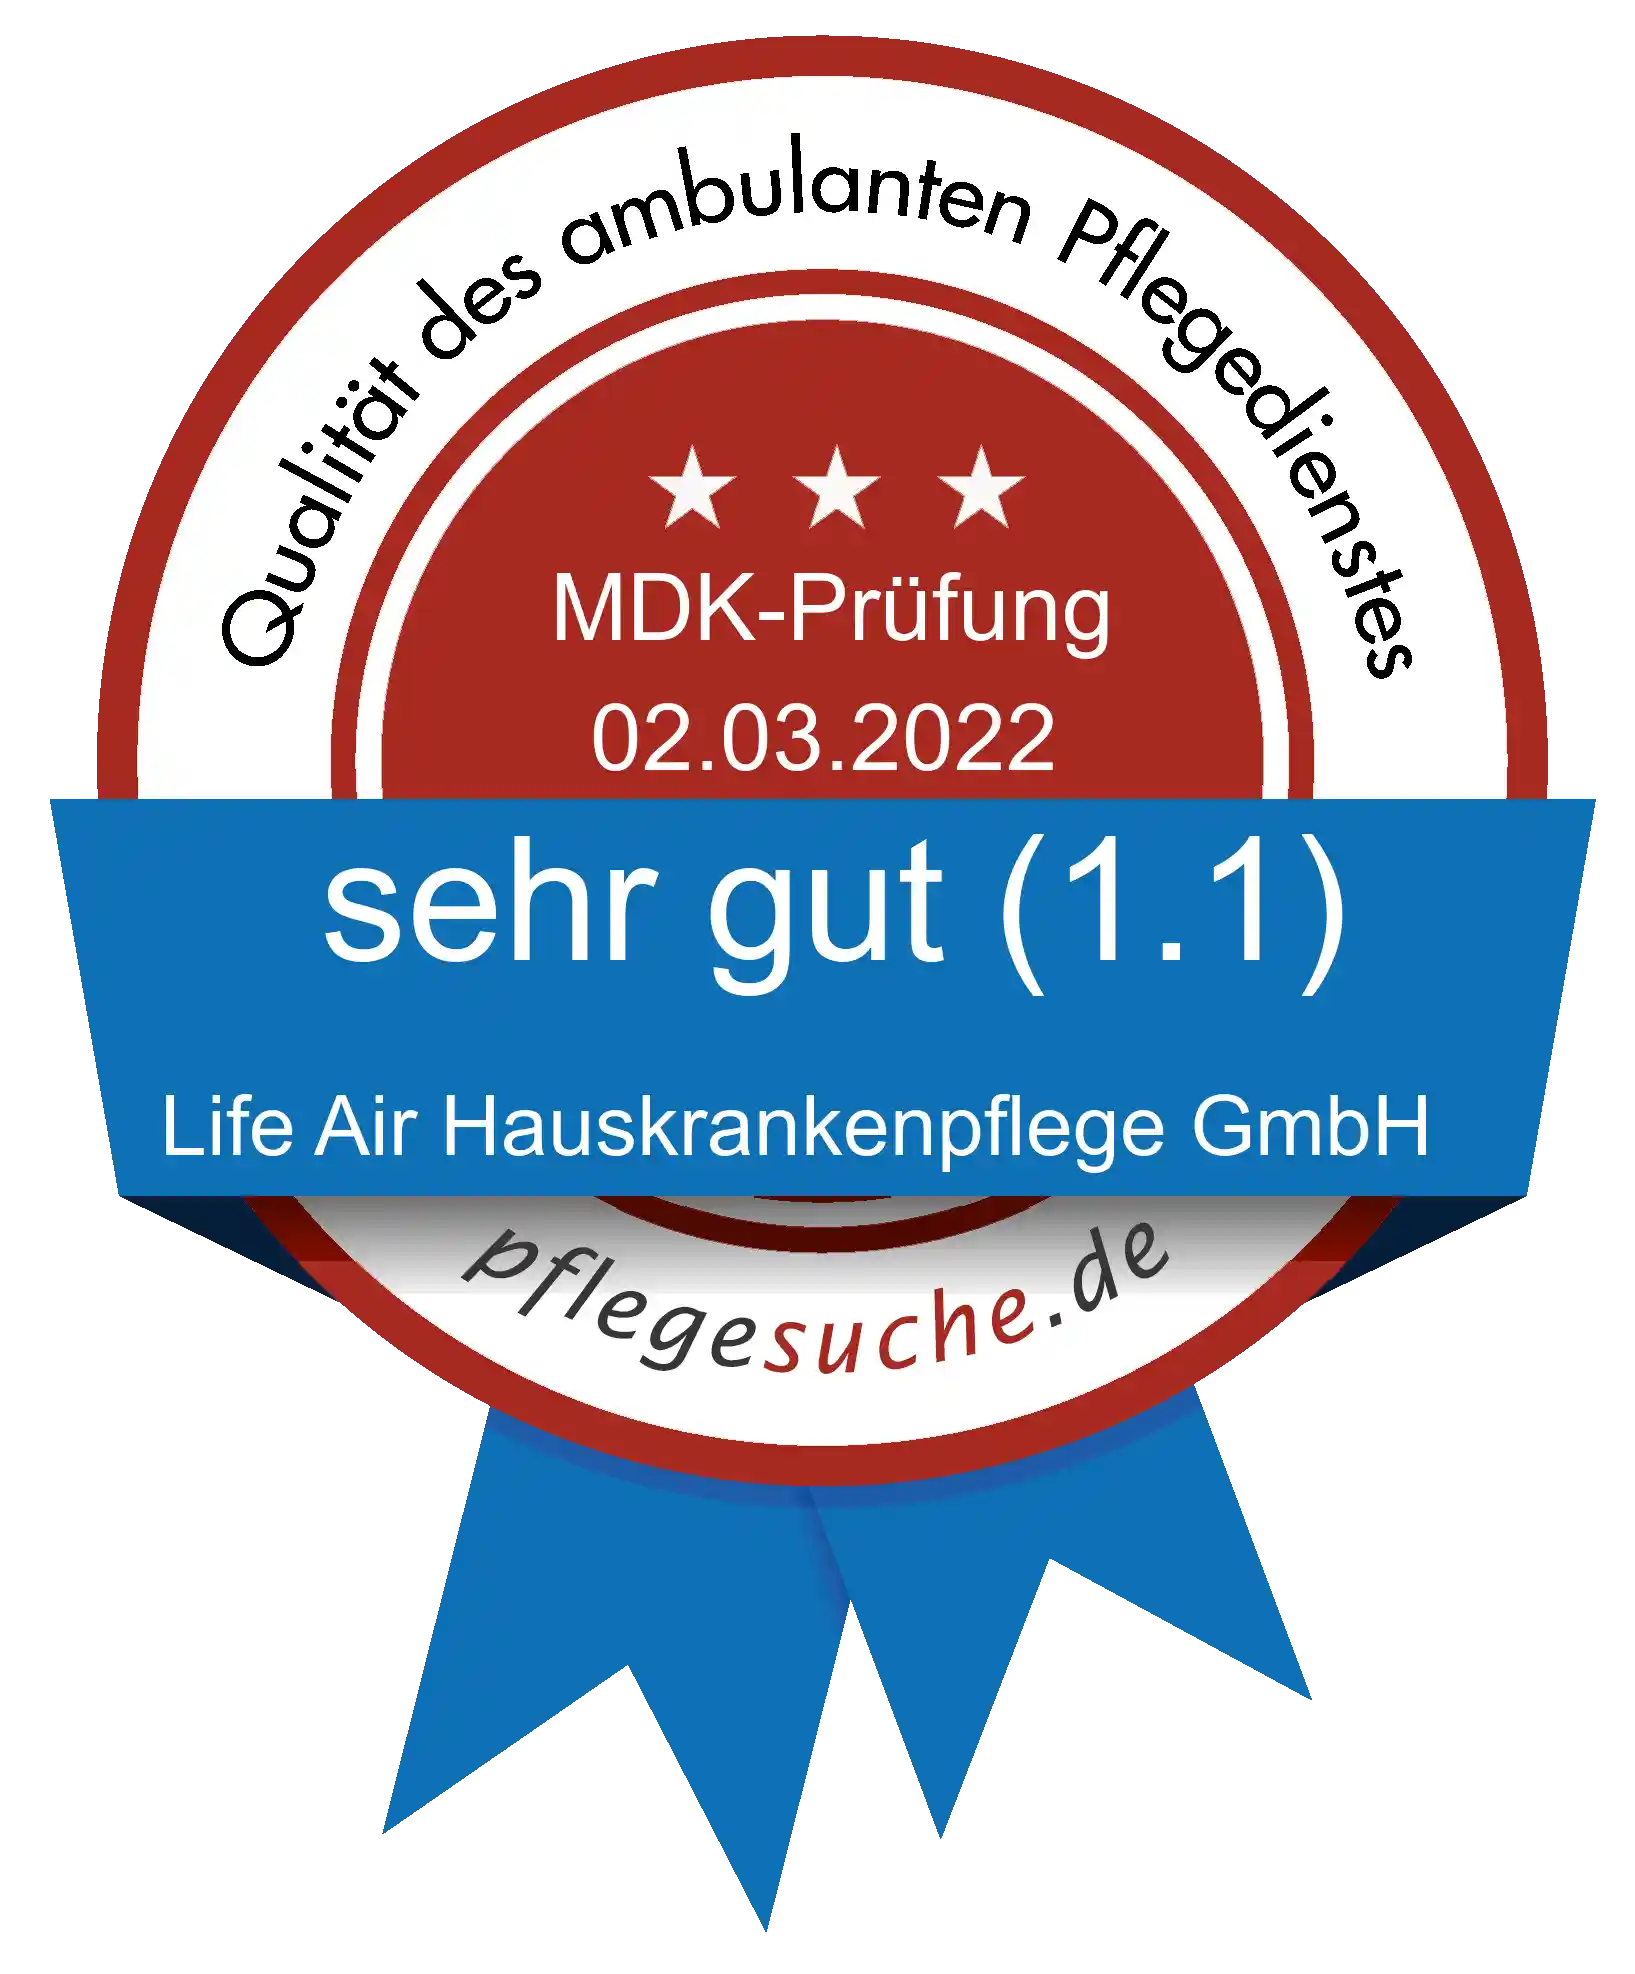 Siegel Benotung: Life Air Hauskrankenpflege GmbH